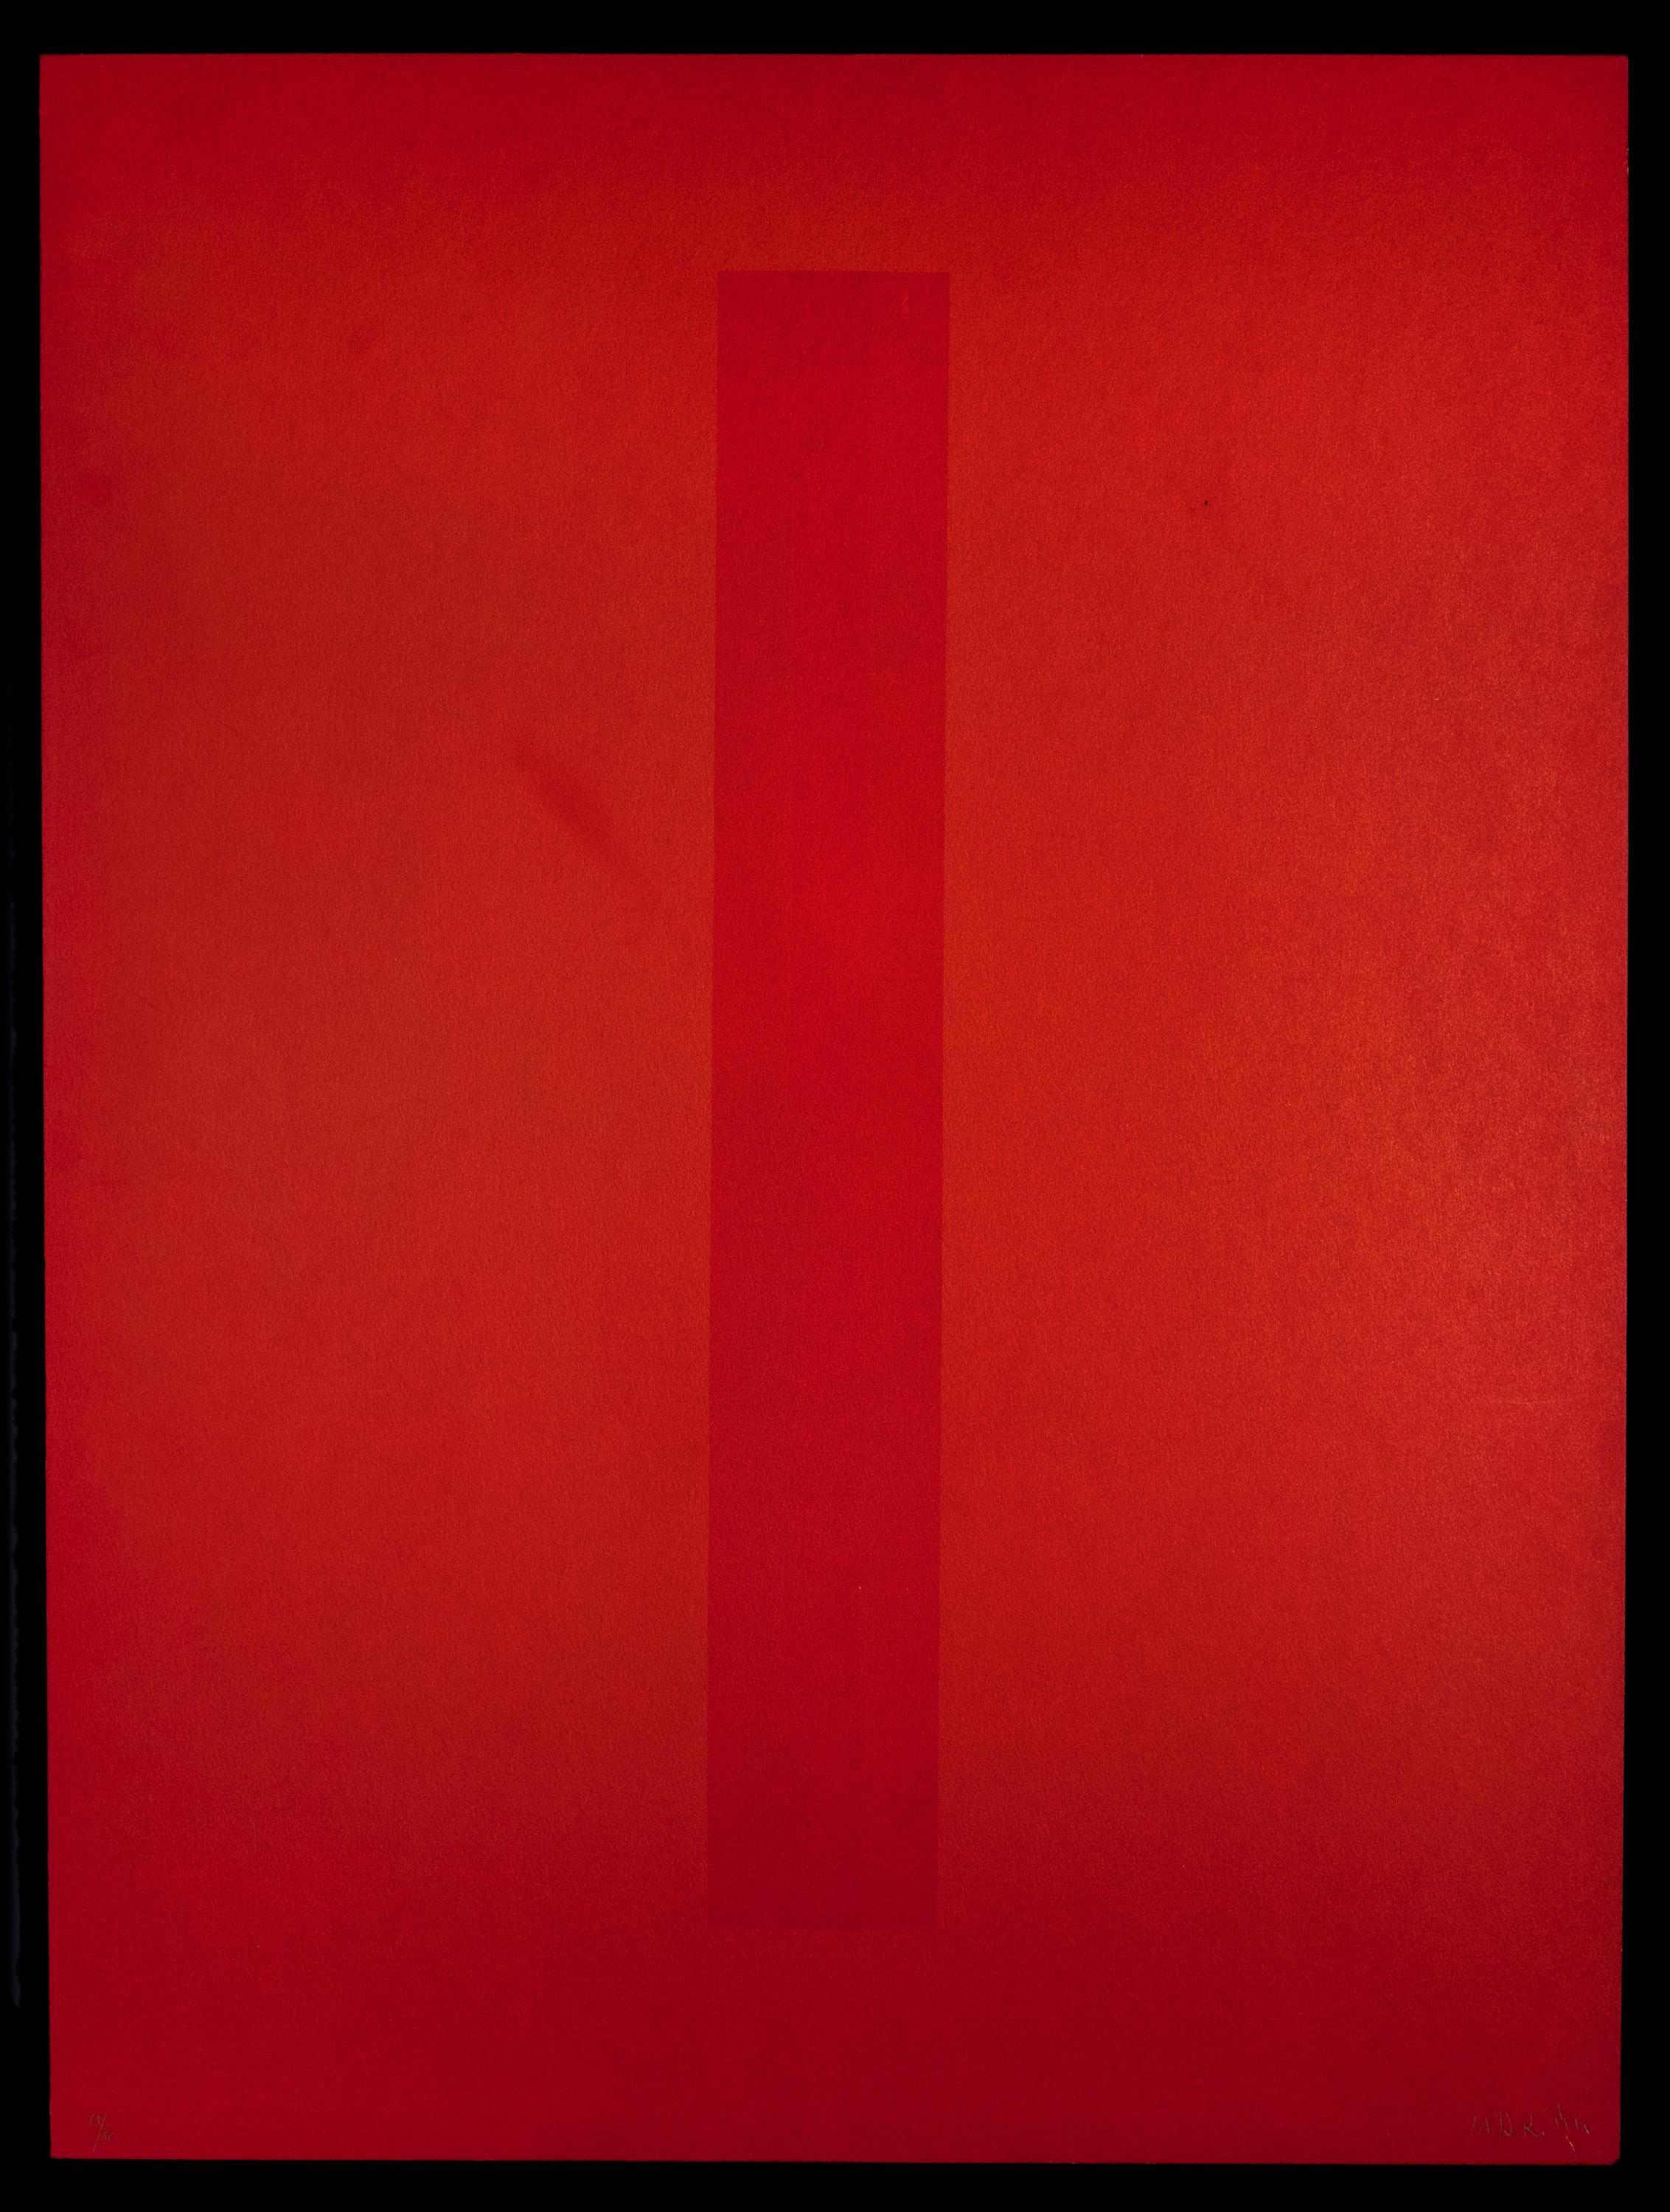 Red Six IX - Original Lithograph by Lorenzo Indrimi - 1970s